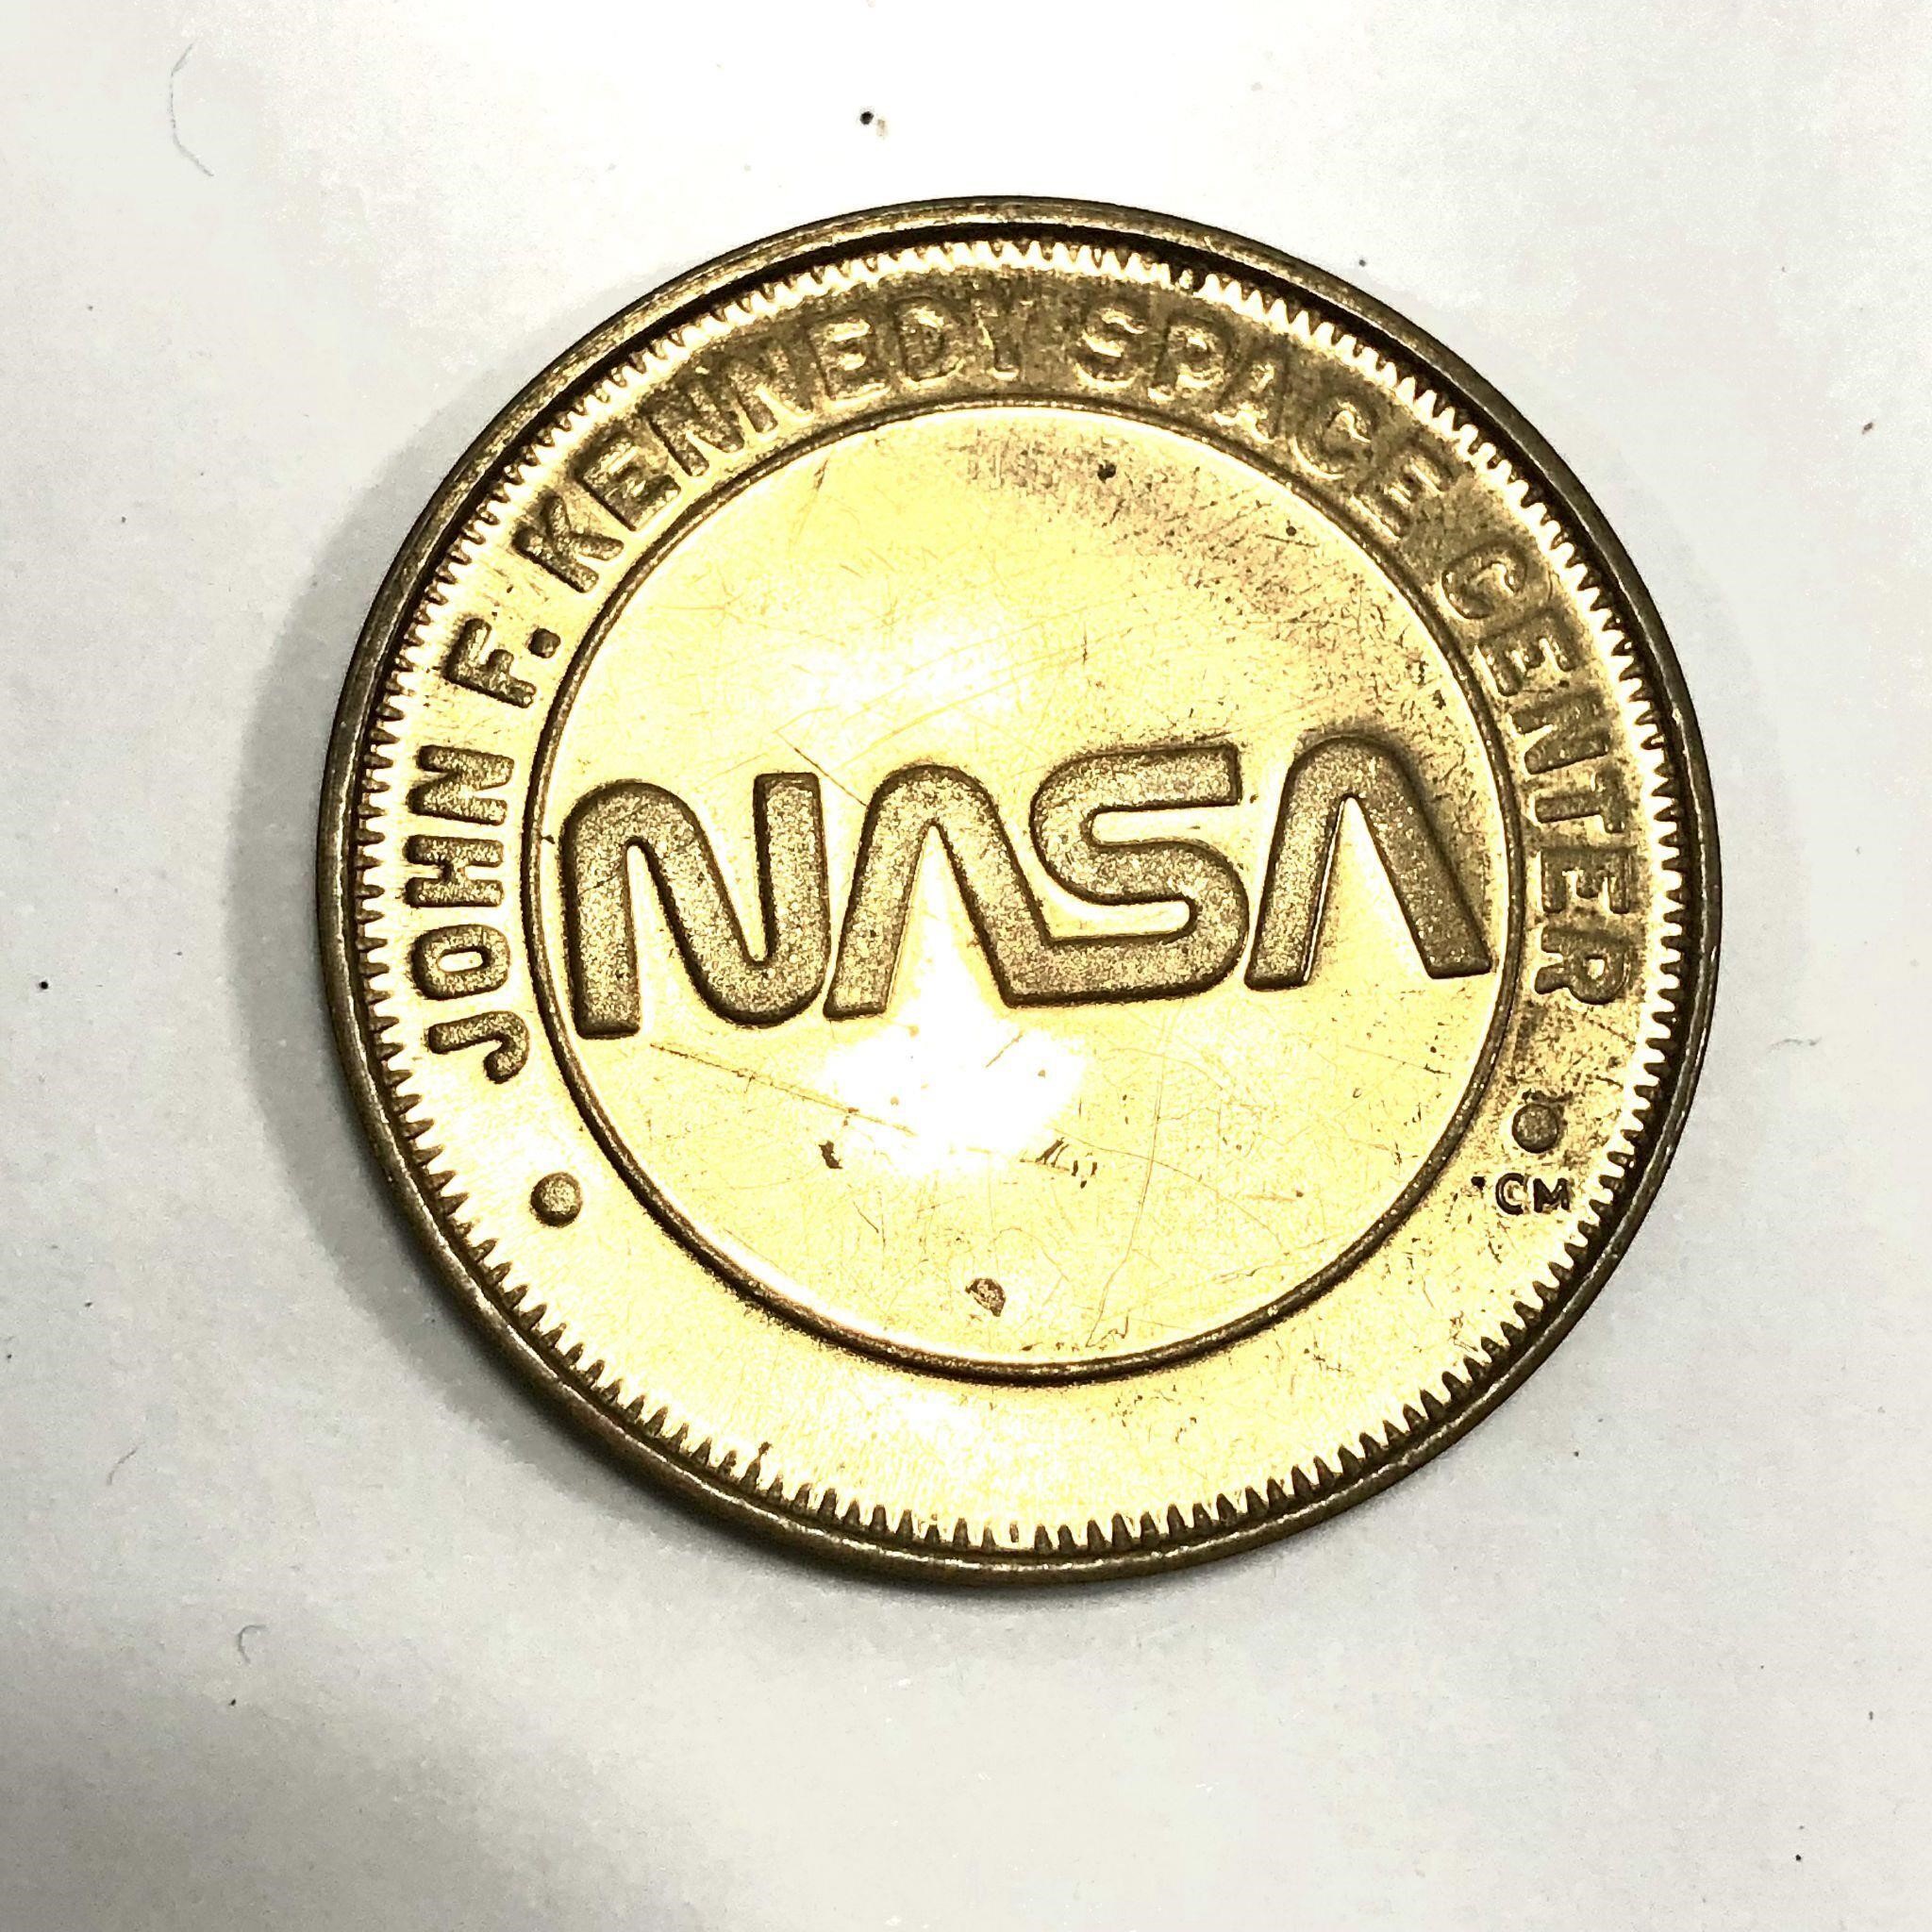 Vintage NASA Apollo VIII Commemorative Medal